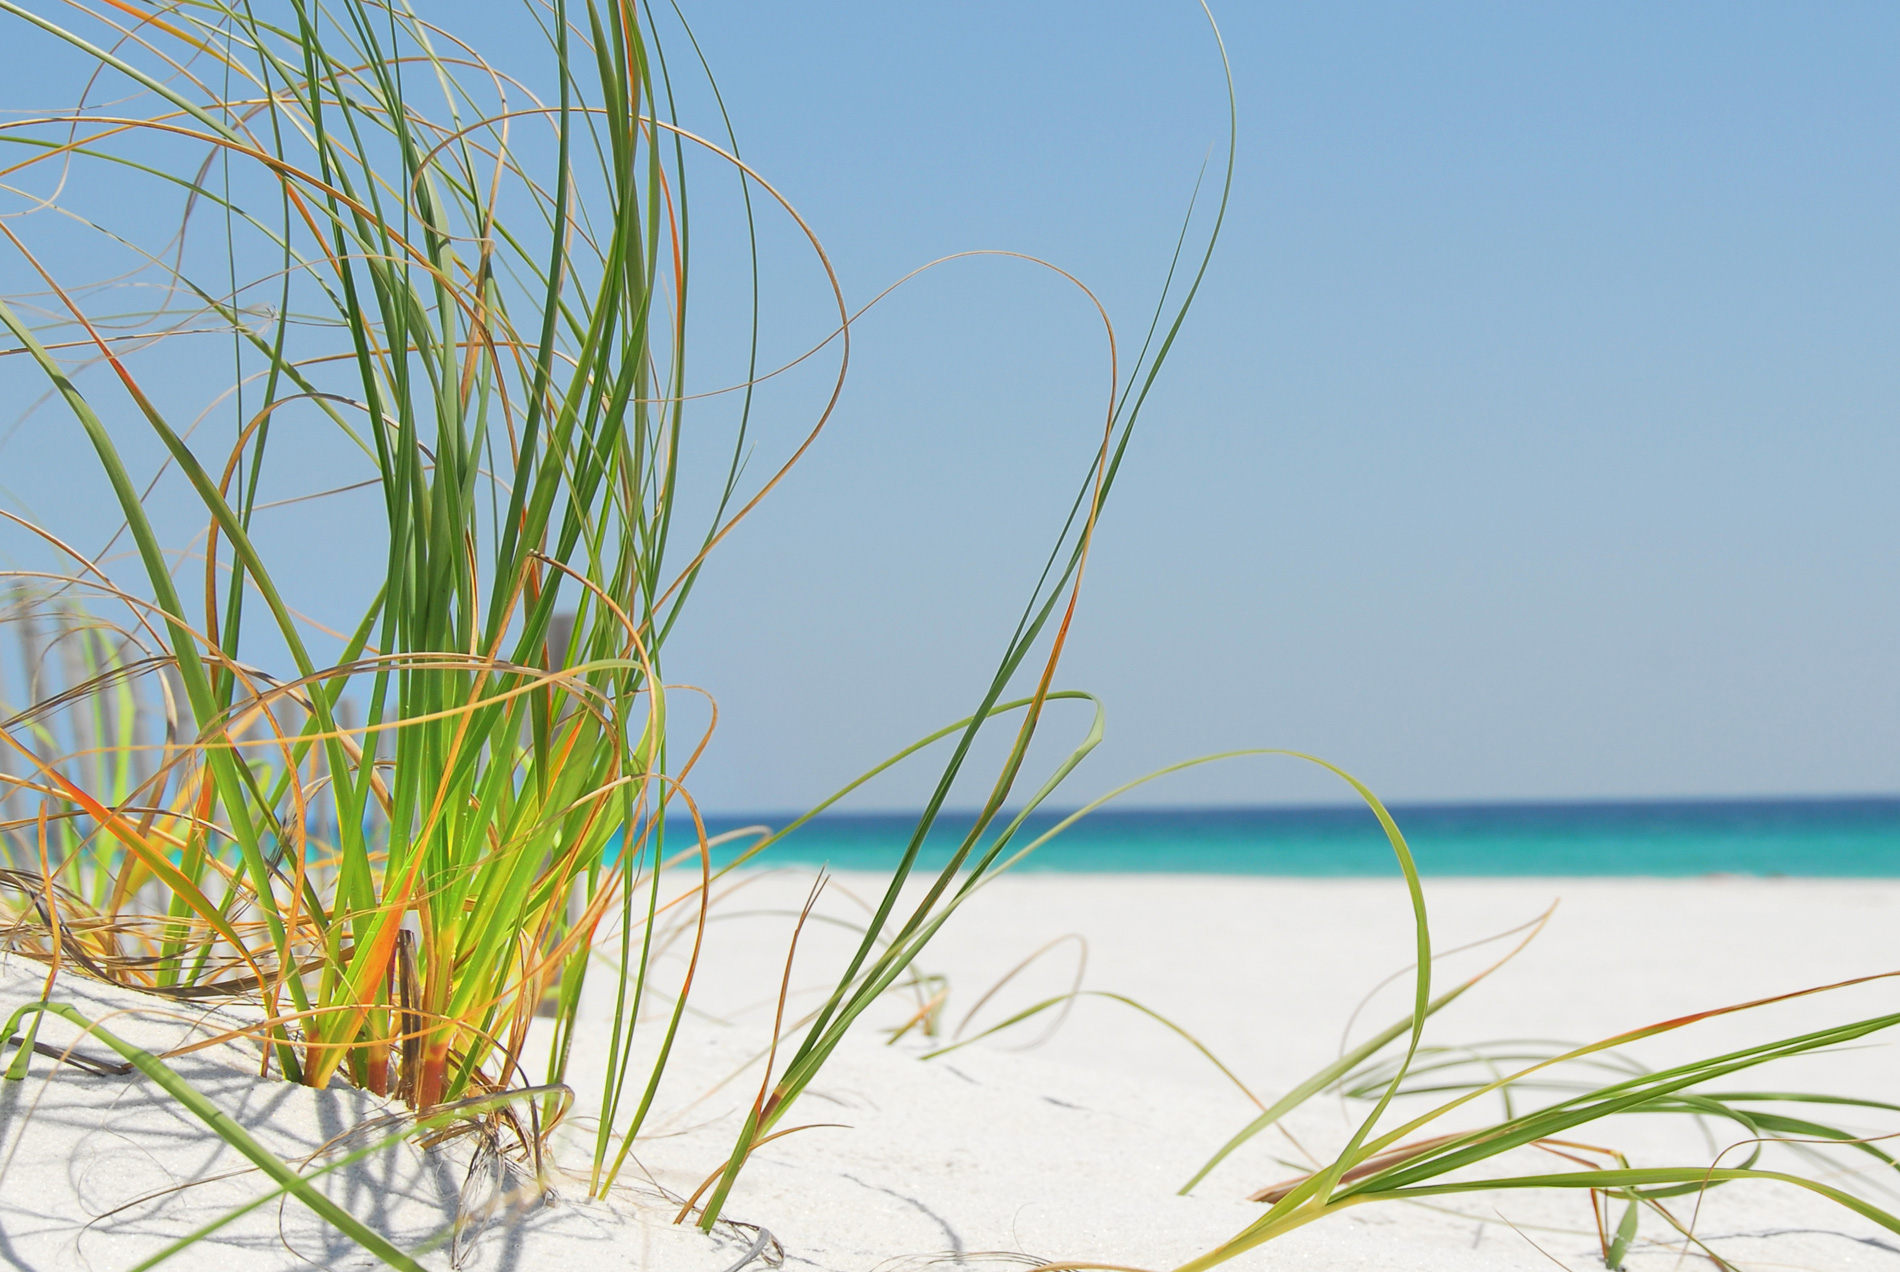 Background_Pensacola-Beach-Grass-Sand-Water-Sun-Fun | Commercial ...